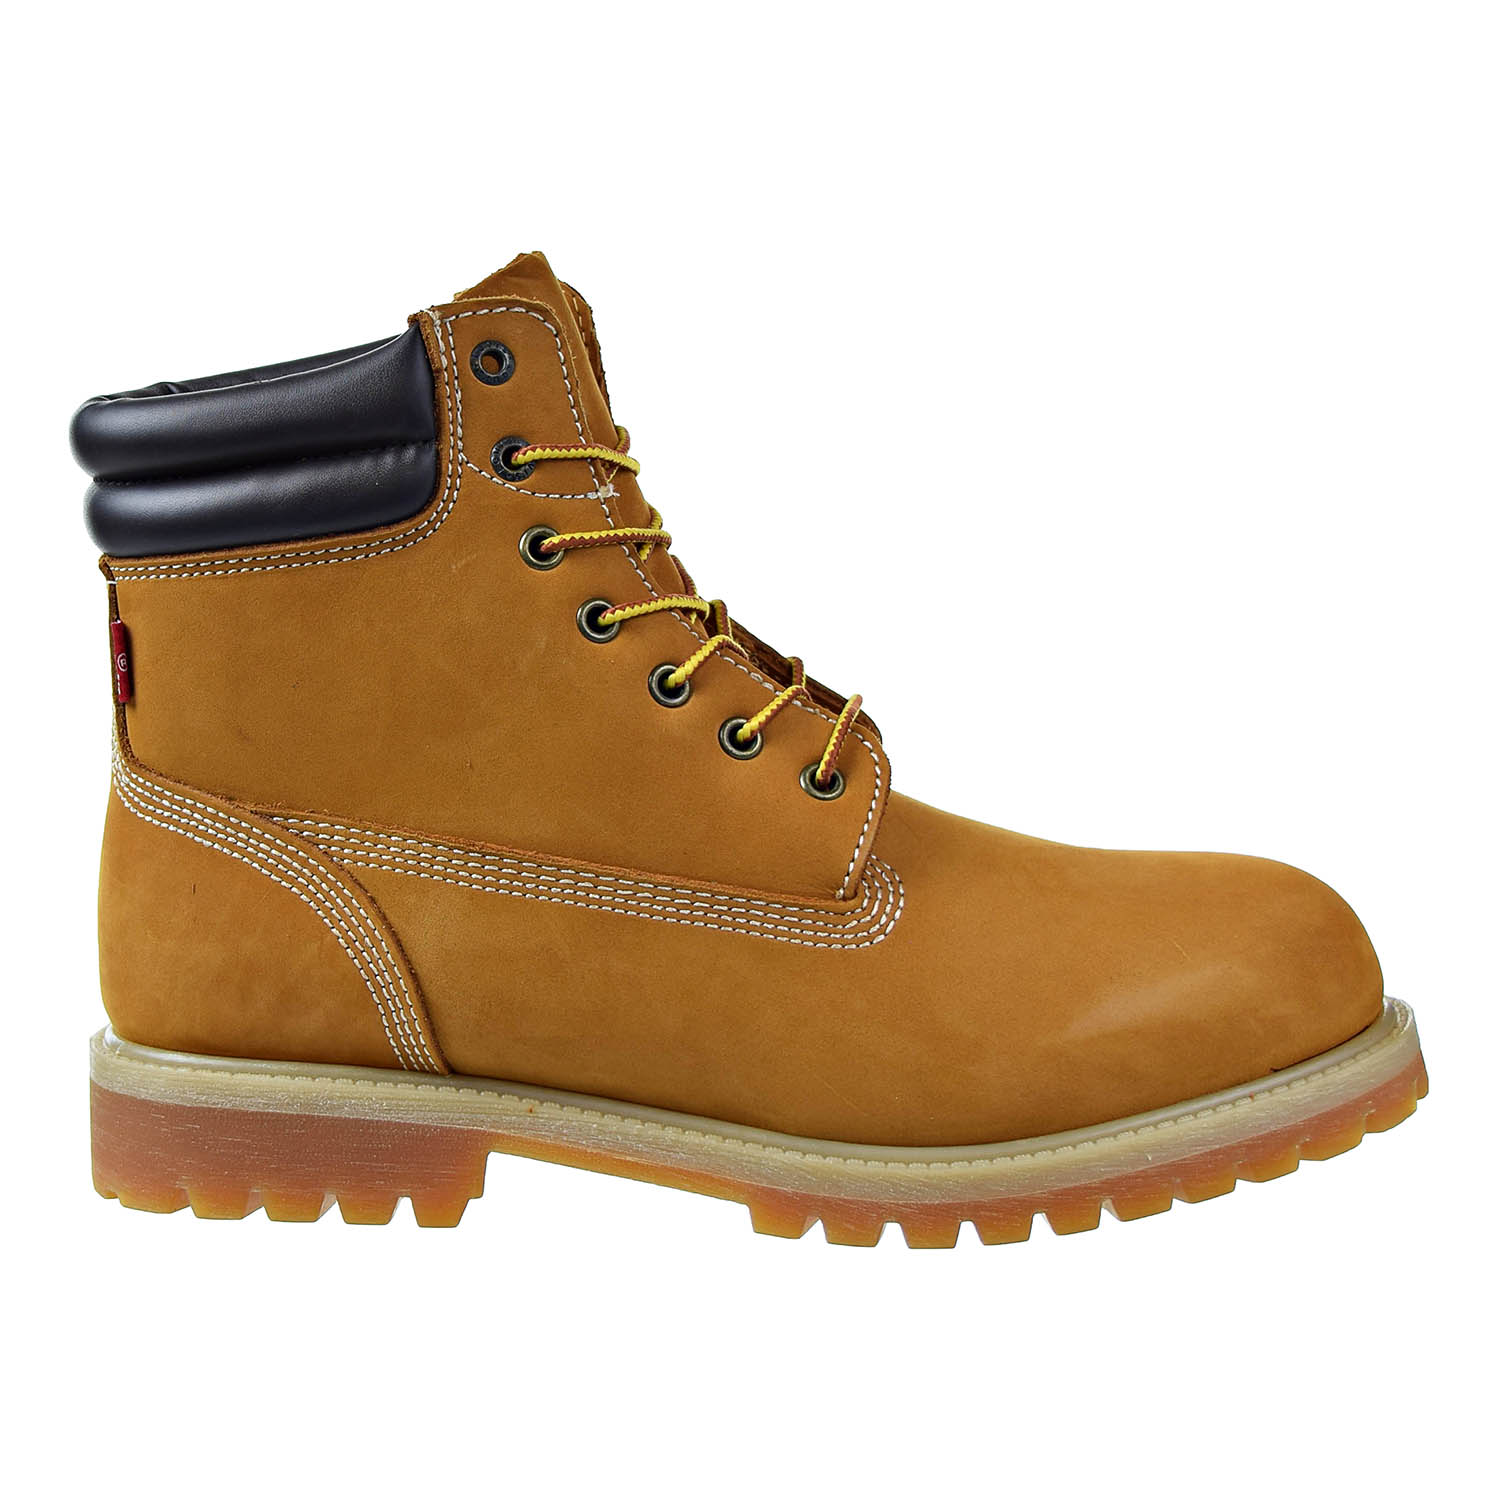 Levi's Harrison Engineer Men's Boots Wheat 517190-11B | eBay